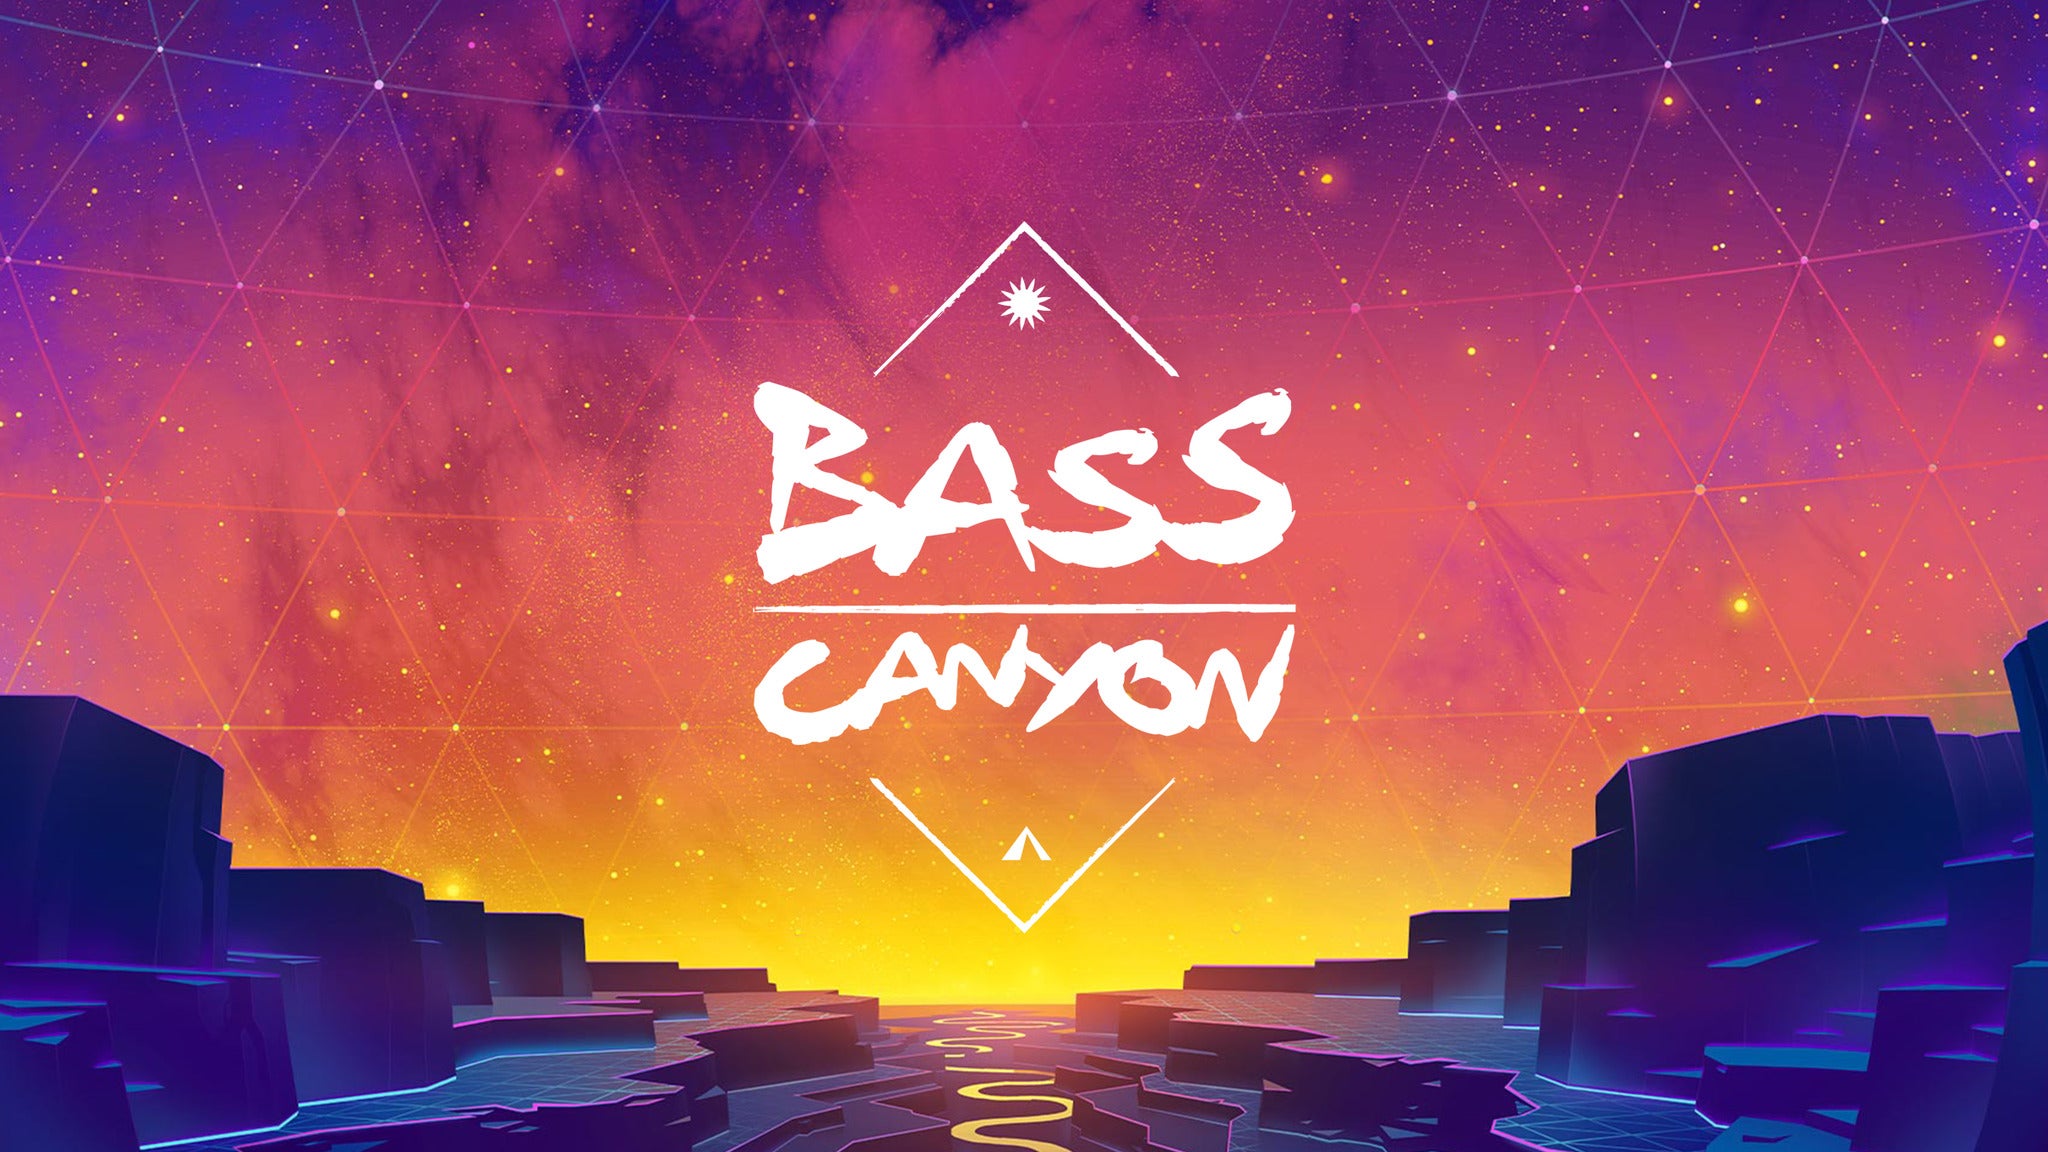 Bass Canyon Tickets, 2021 Concert Tour Dates Ticketmaster